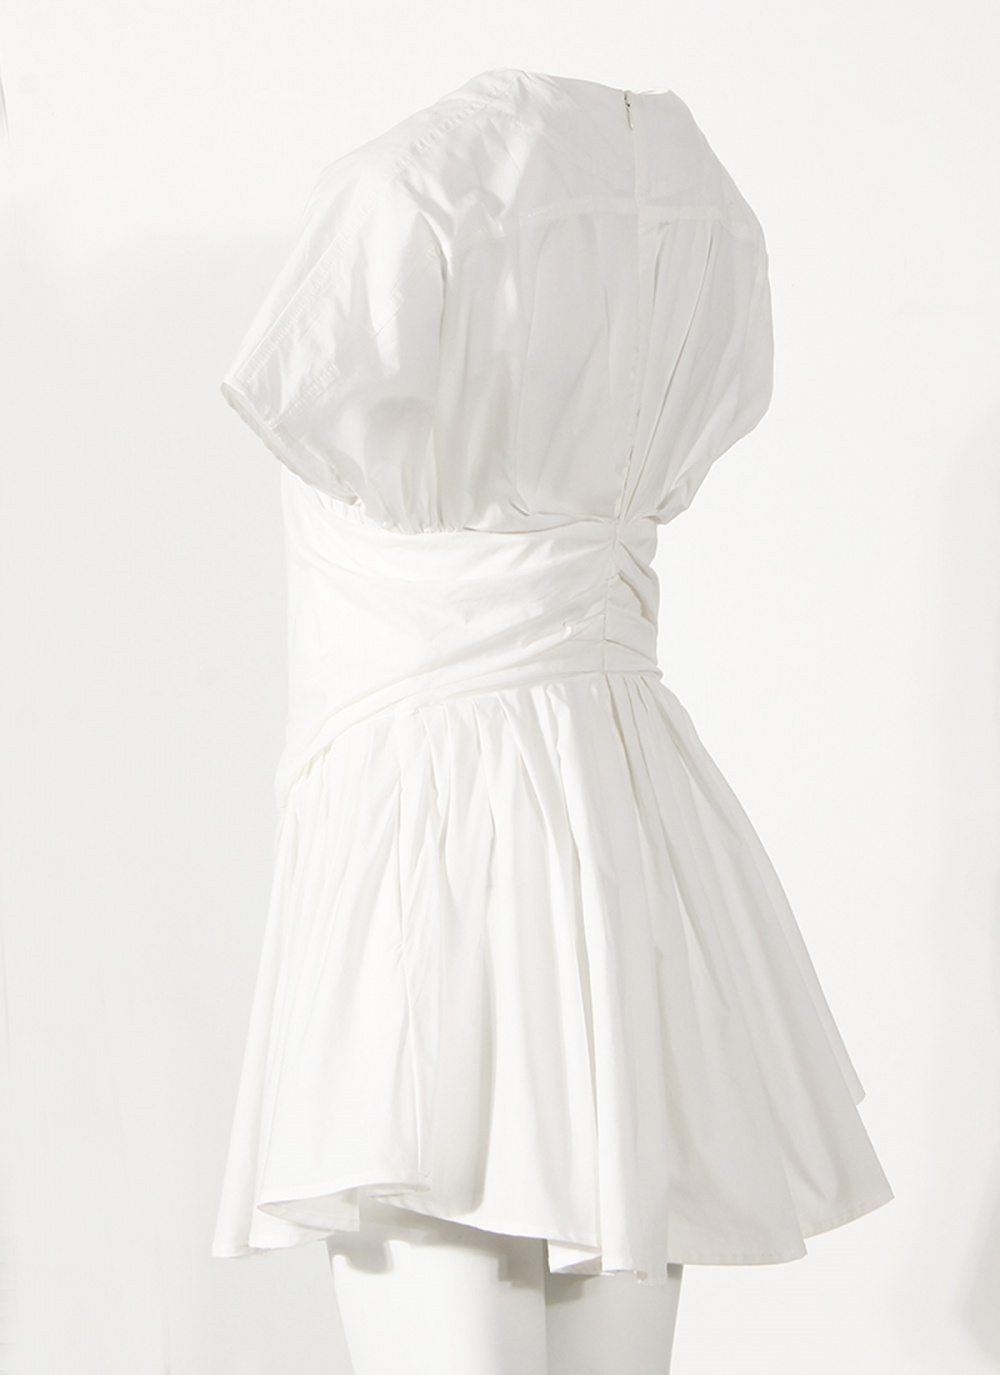 White slim summer France style high waist raglan sleeve dress